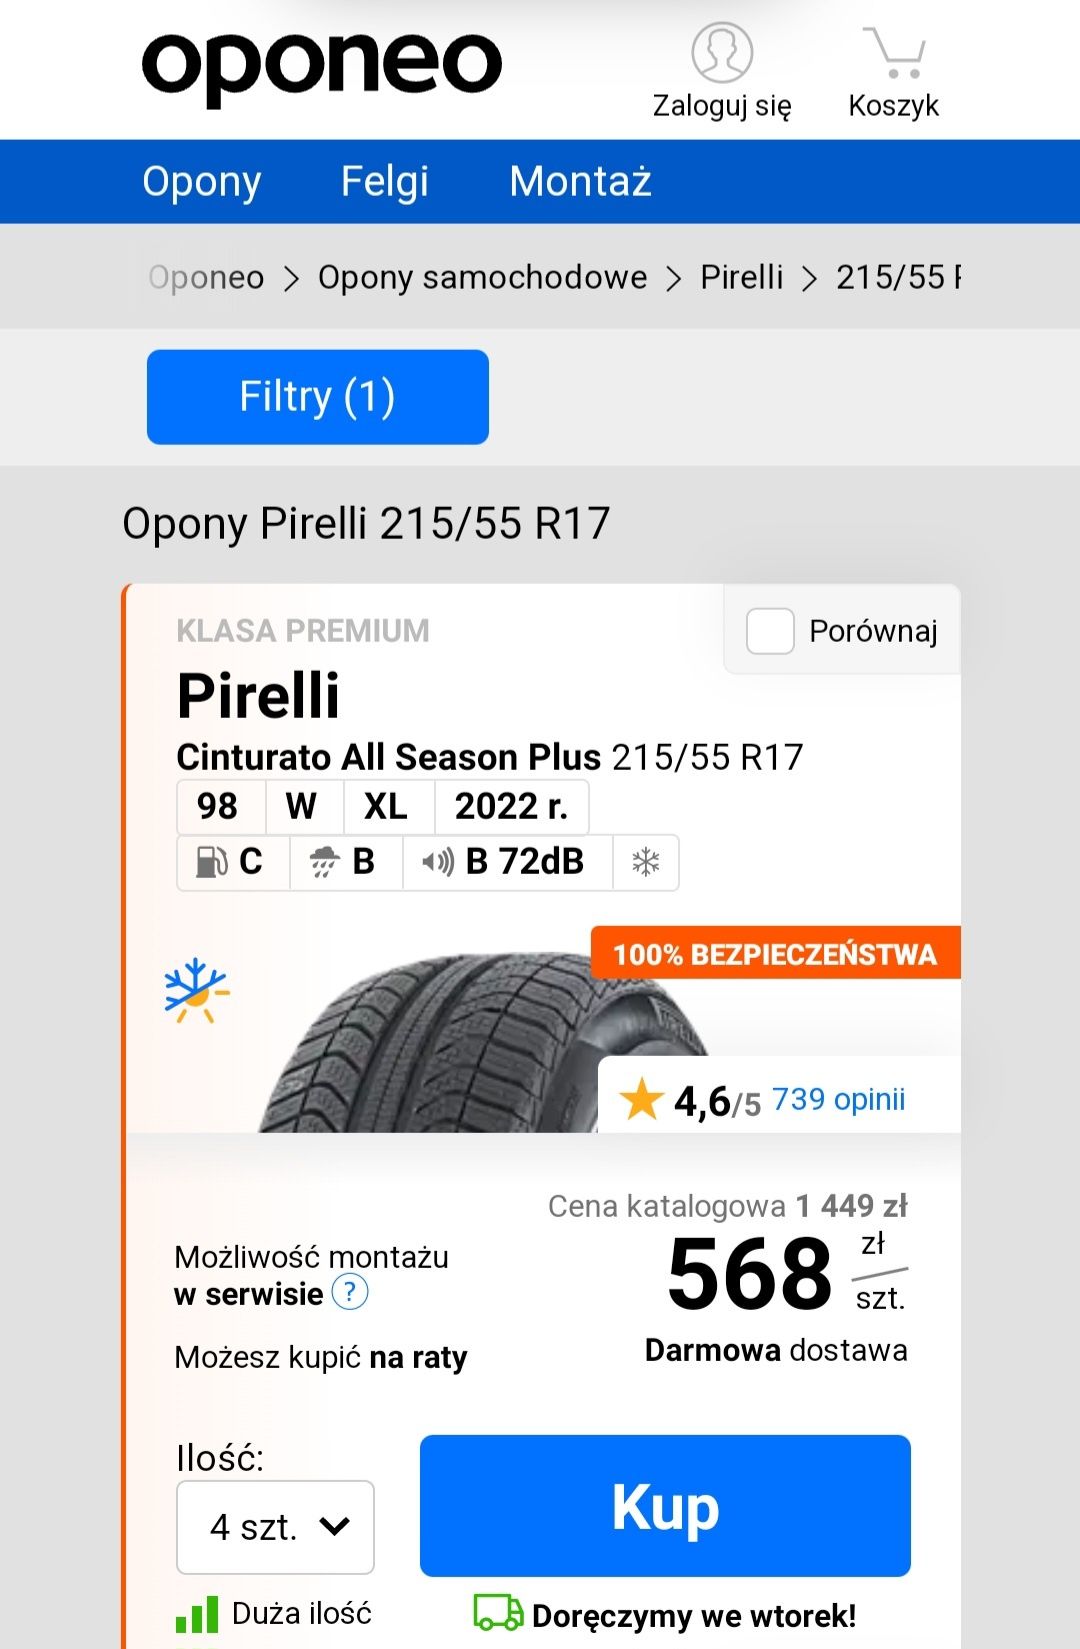 Opony PIRELLI cinturato Plus, all season 98W 215/55 R17 6mm bieżnika